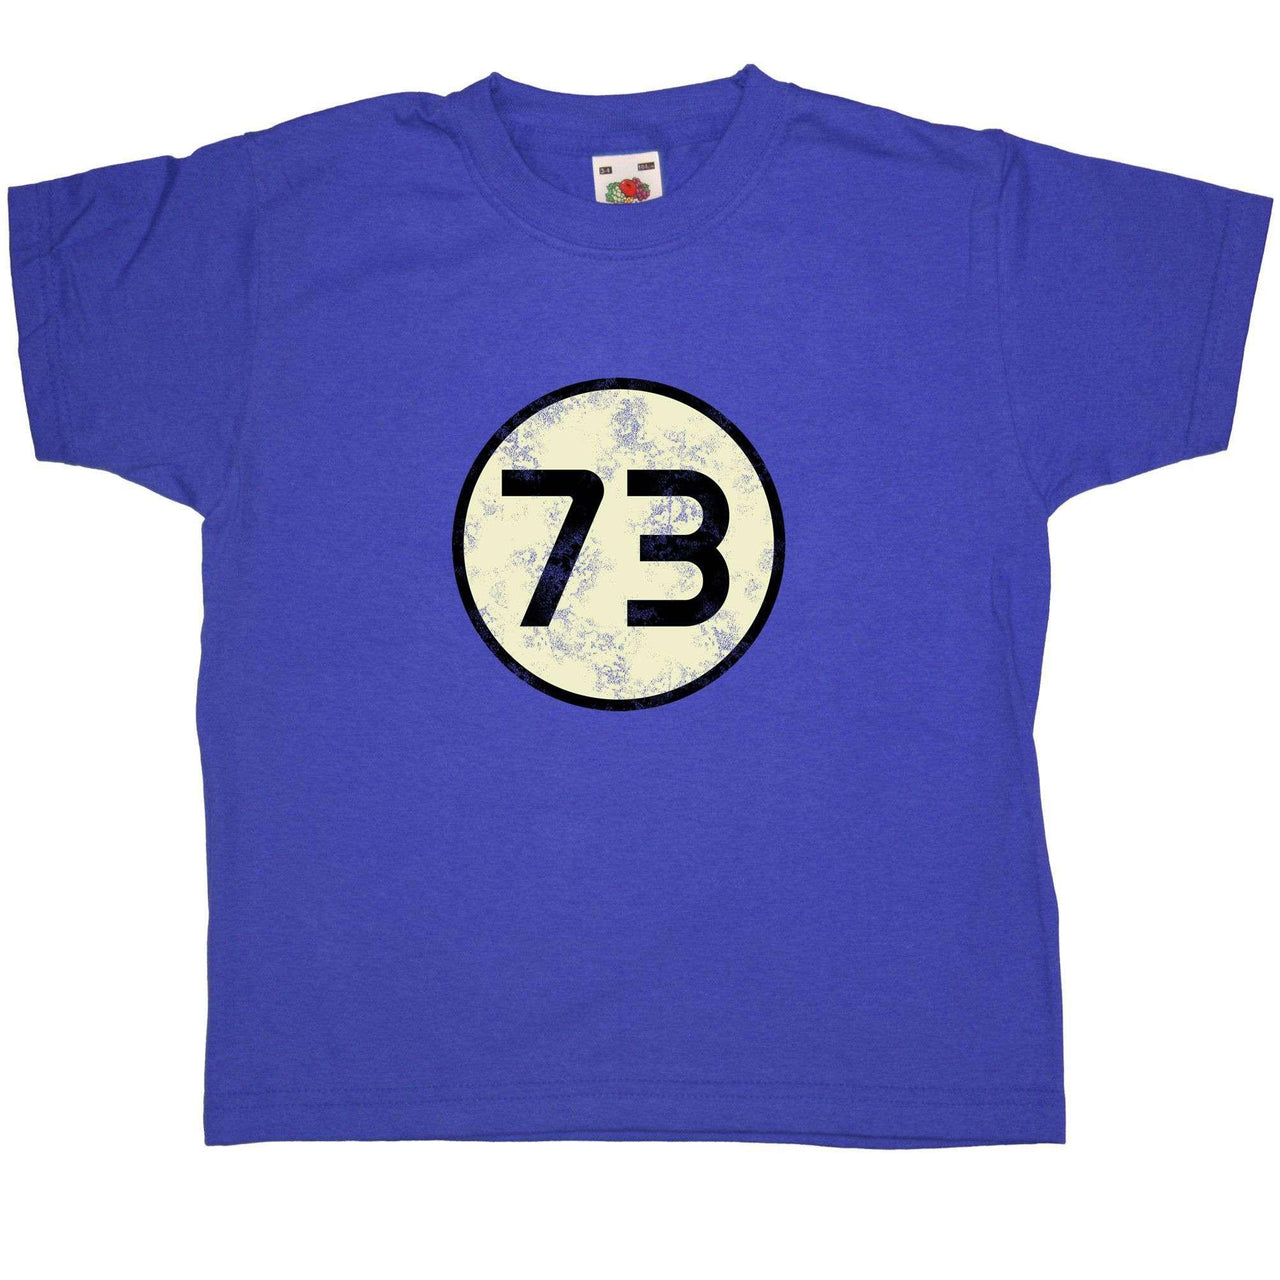 Sheldon's Distressed 73 Kids T-Shirt 8Ball